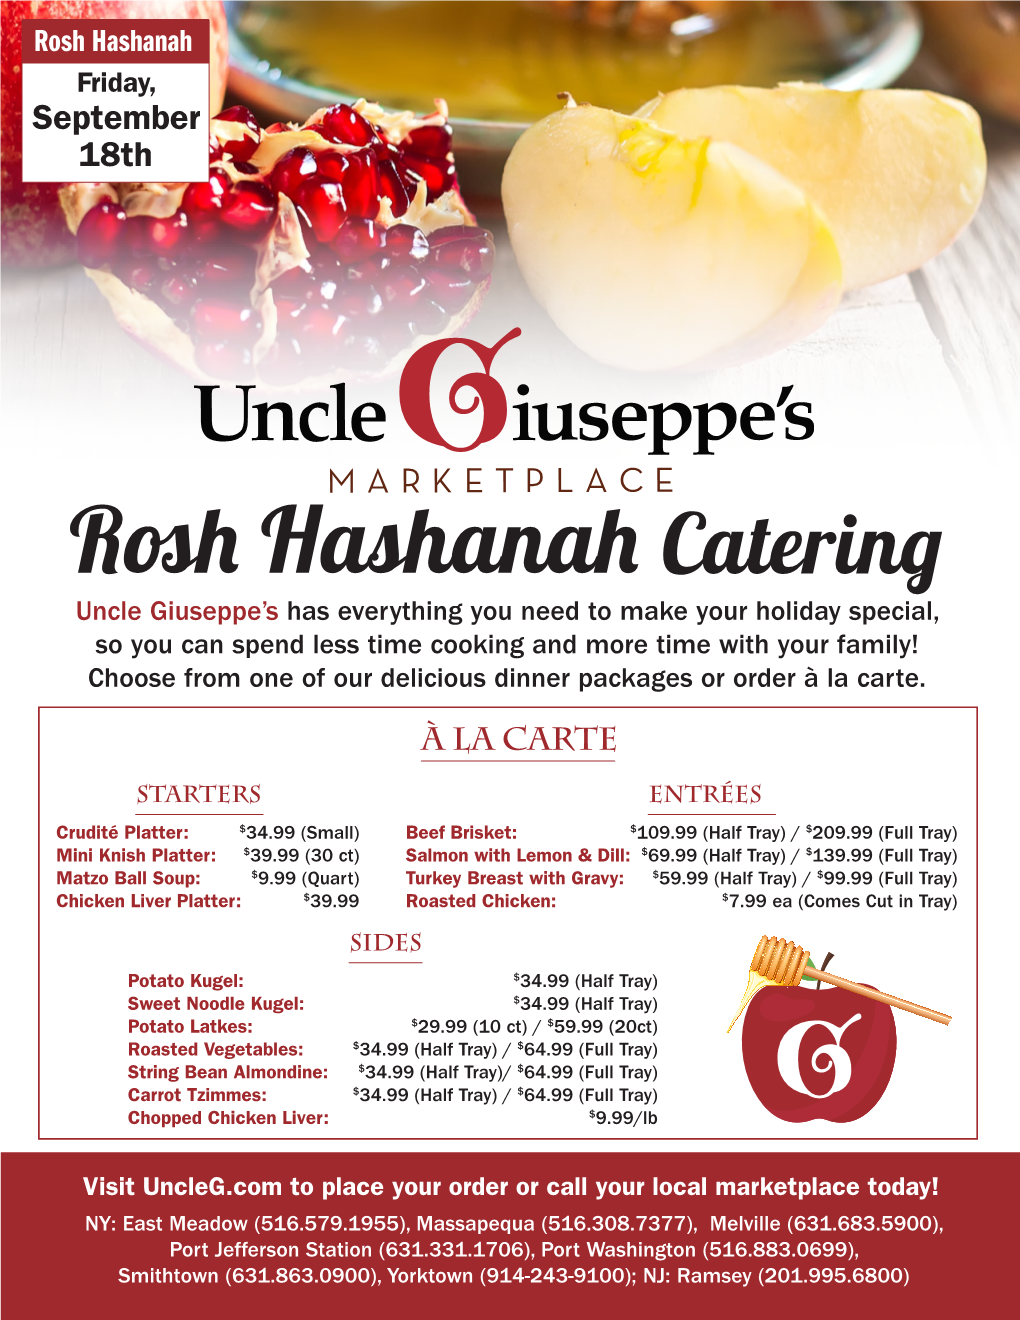 Rosh Hashanah Catering